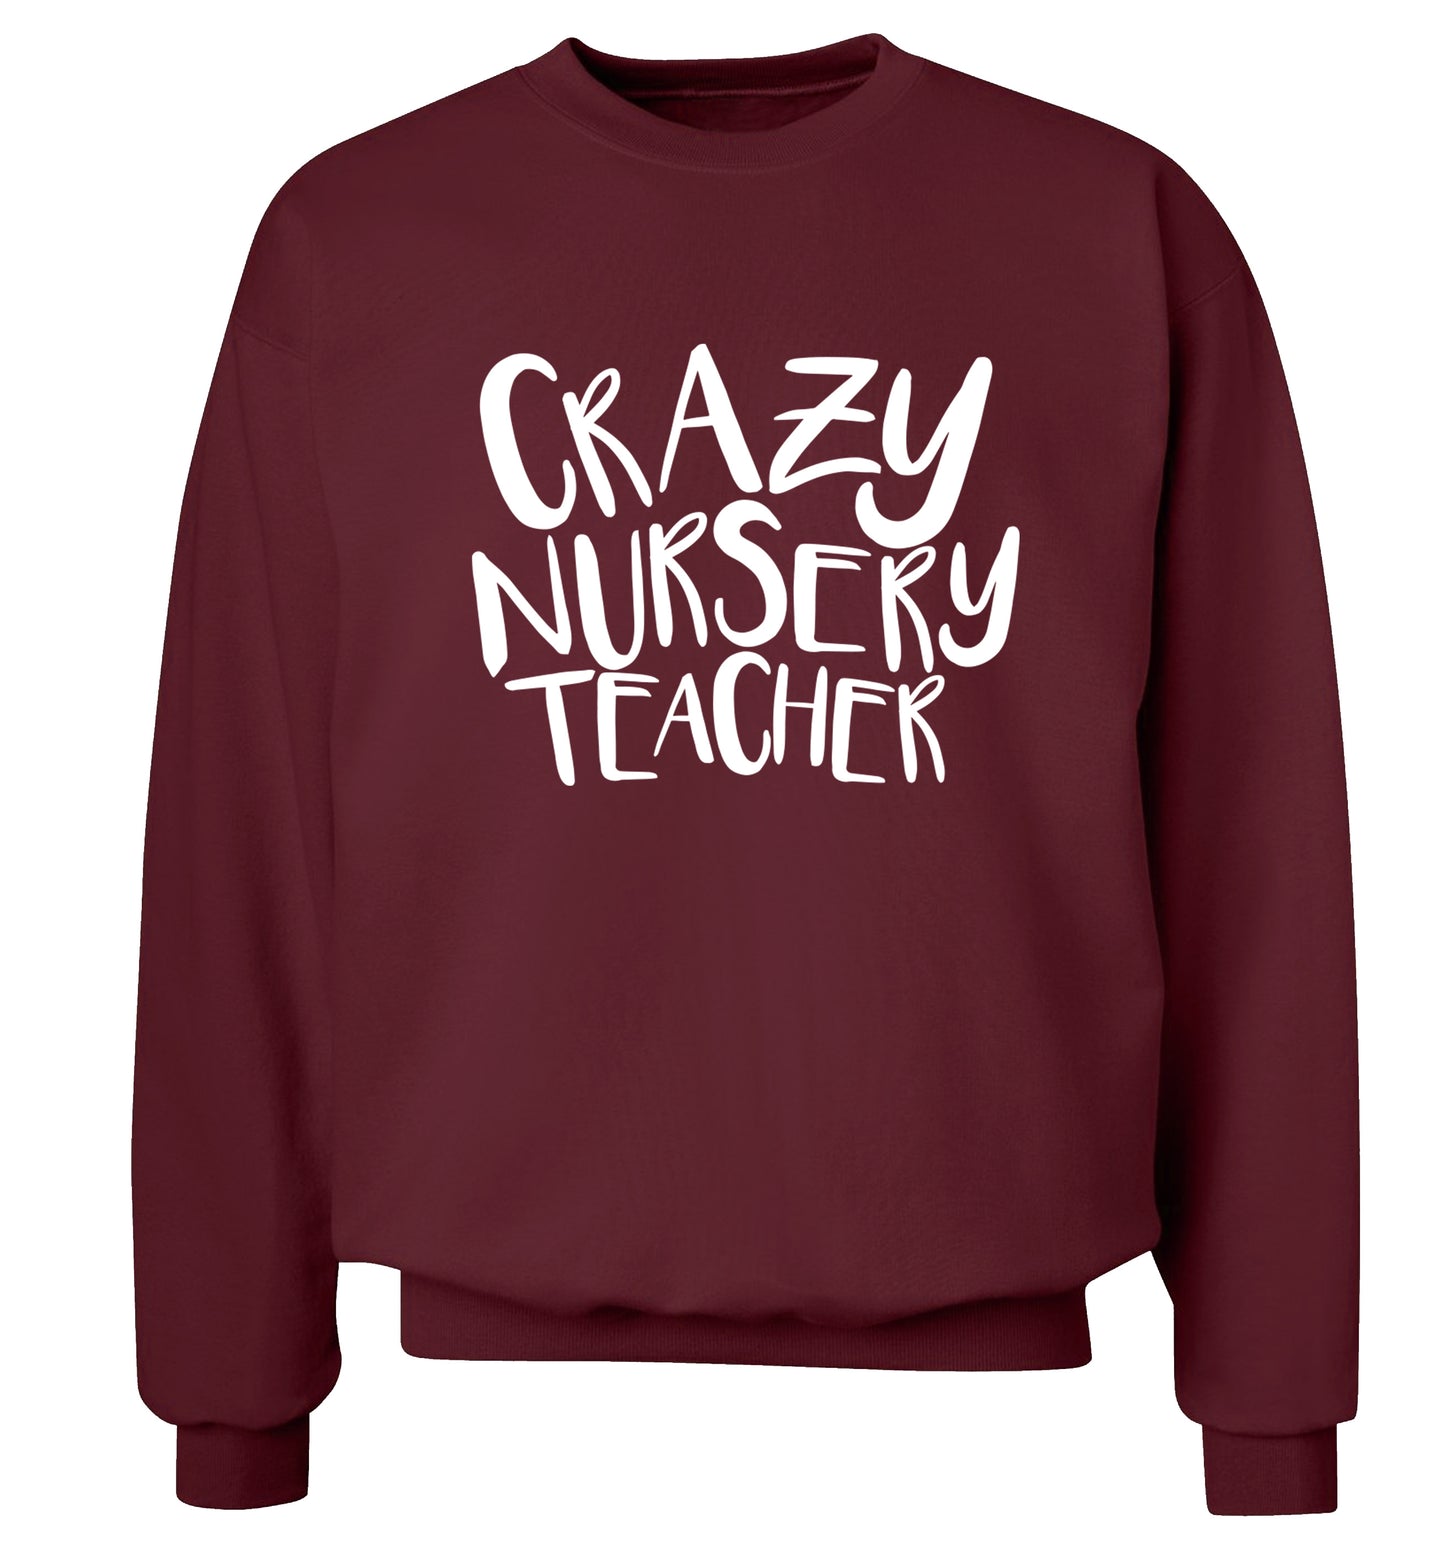 Crazy nursery teacher Adult's unisex maroon Sweater 2XL